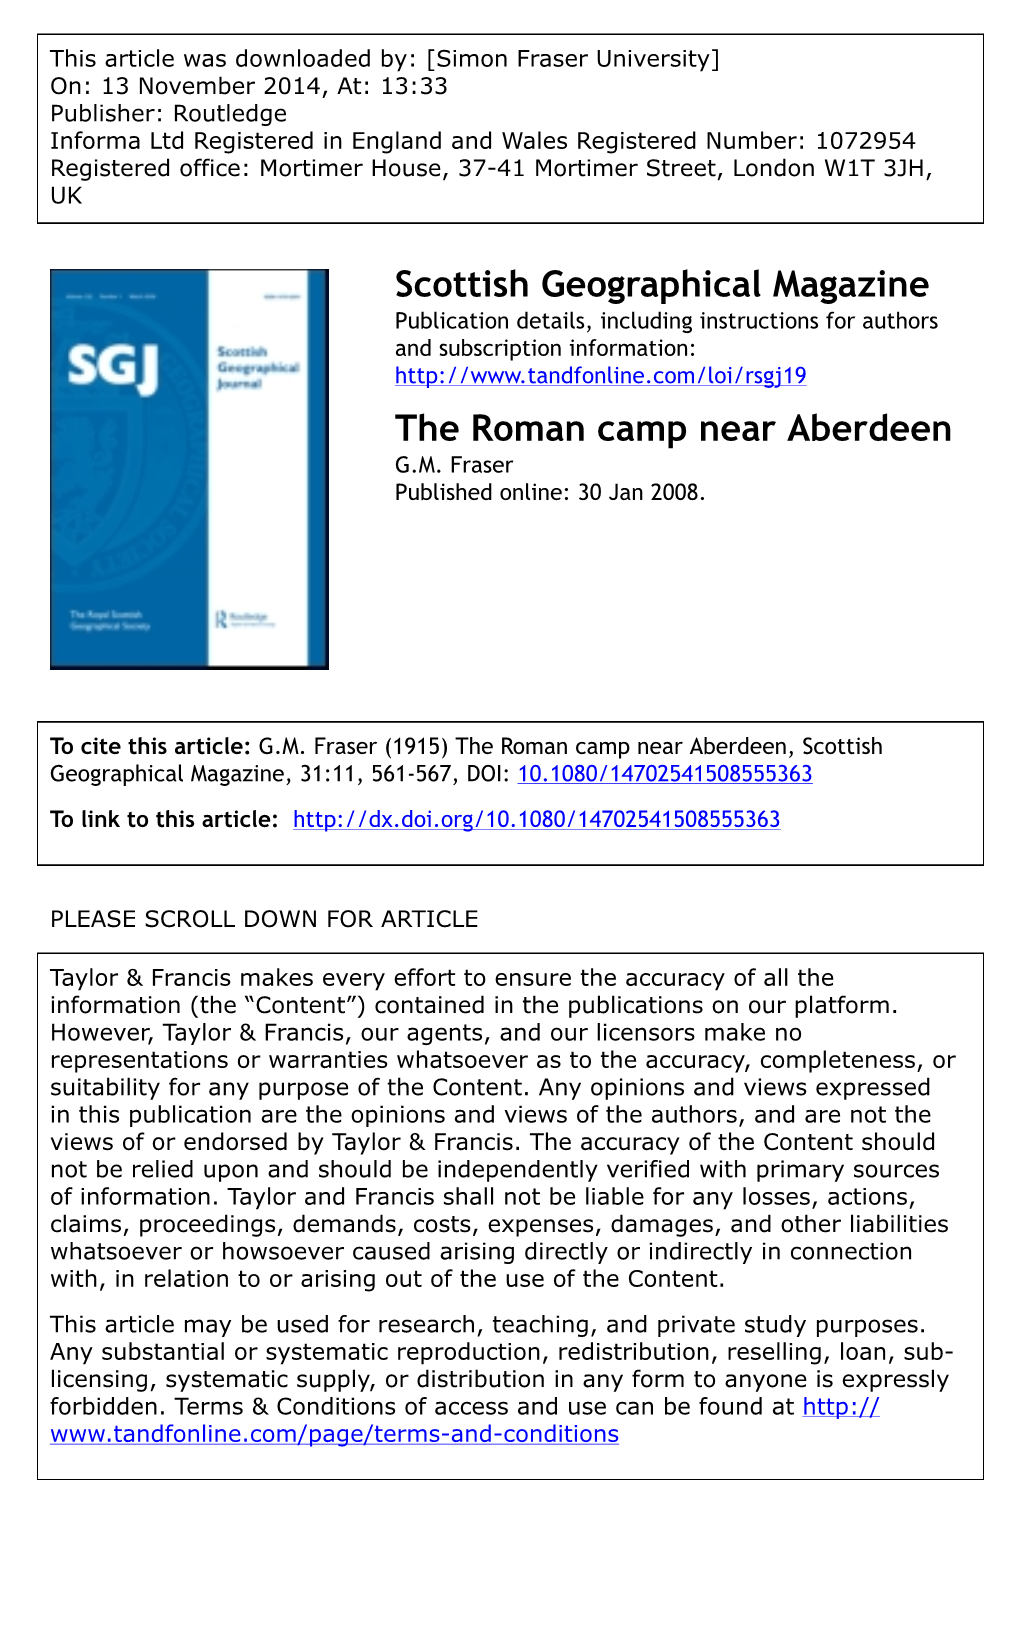 Scottish Geographical Magazine the Roman Camp Near Aberdeen